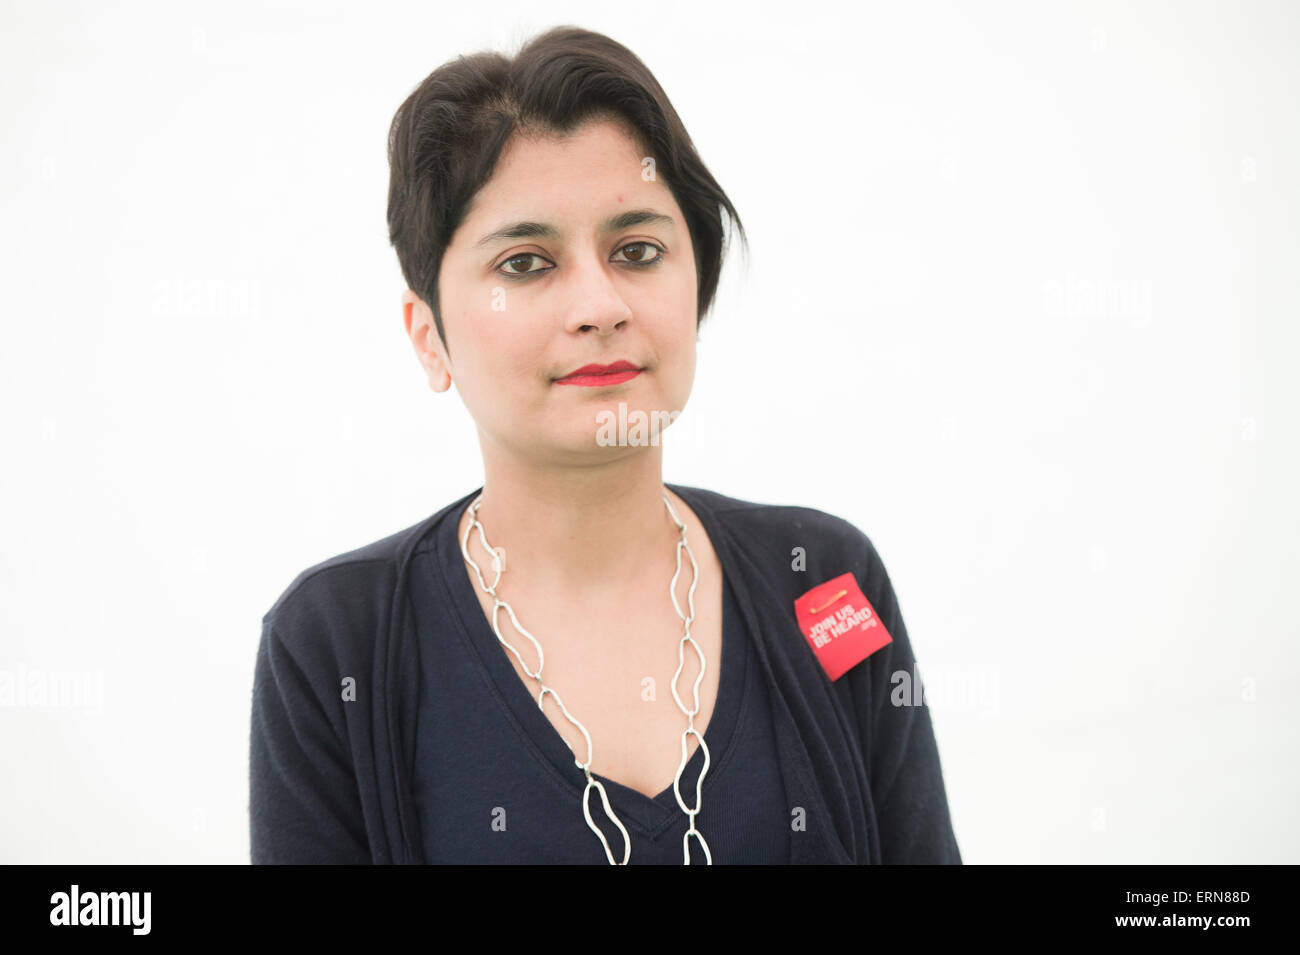 SHAMI CHAKRABARTI aktivistische Wahlkämpfer Hay Festival 2015 Stockfoto